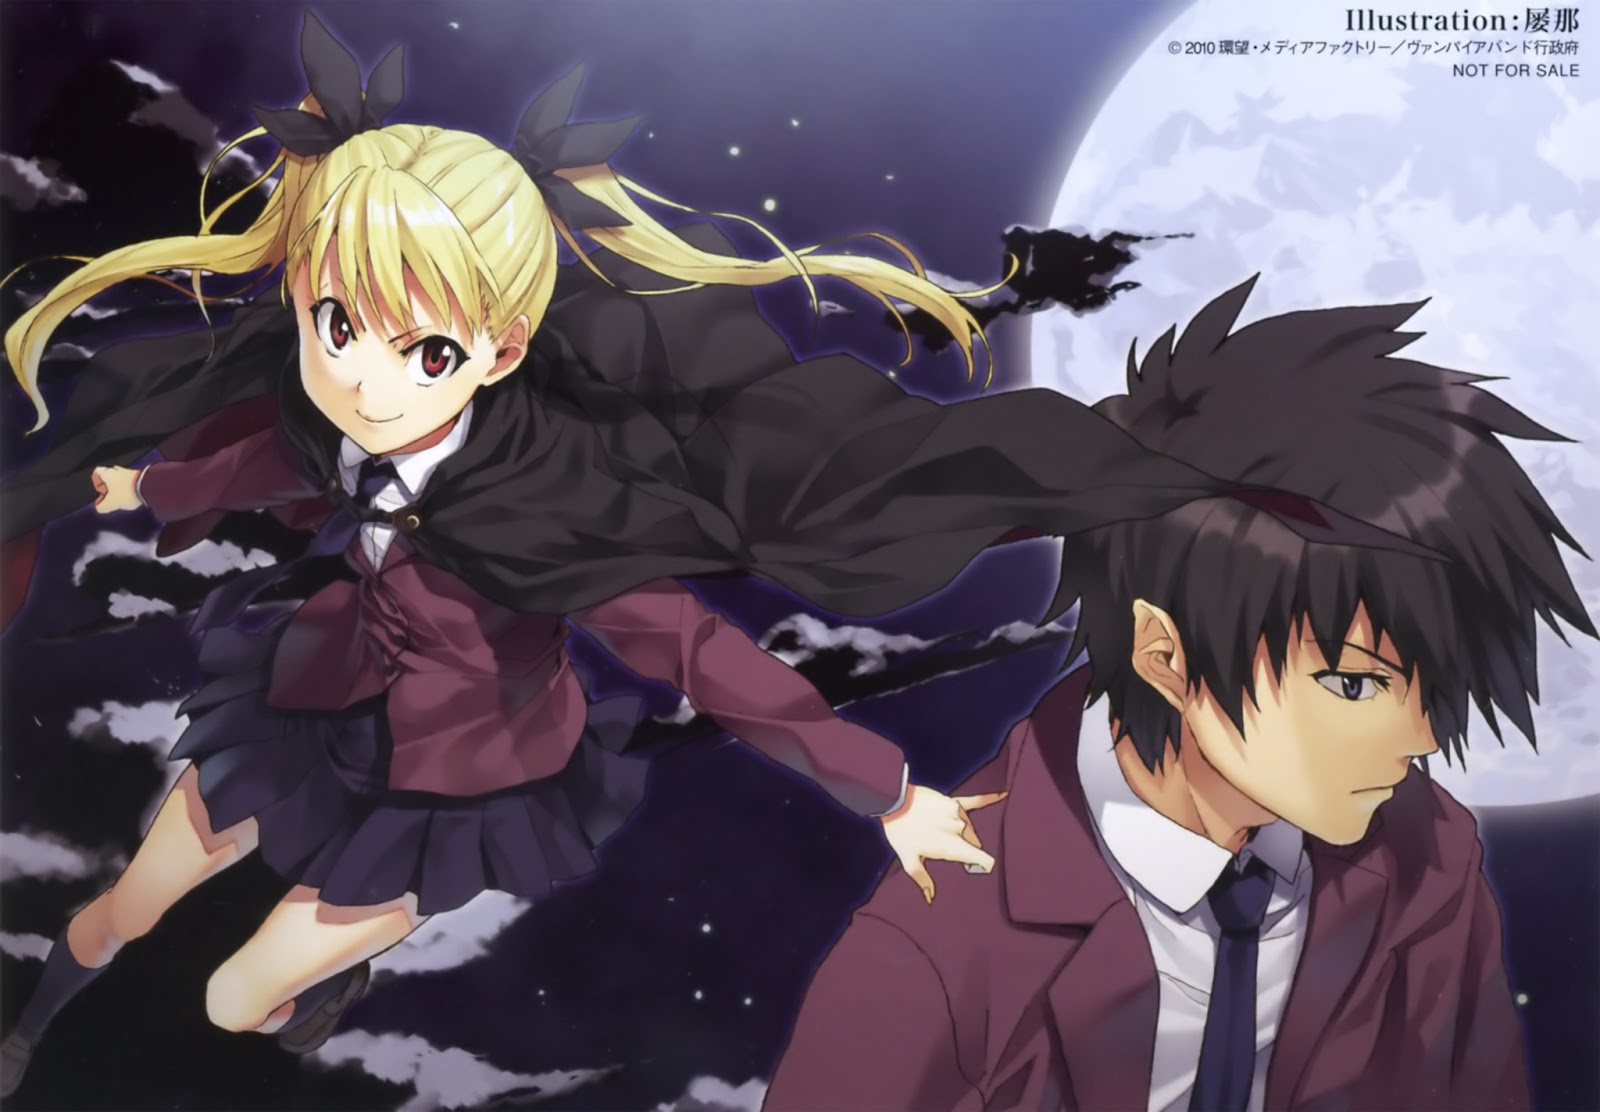 9. "Dance in the Vampire Bund" anime series - wide 2